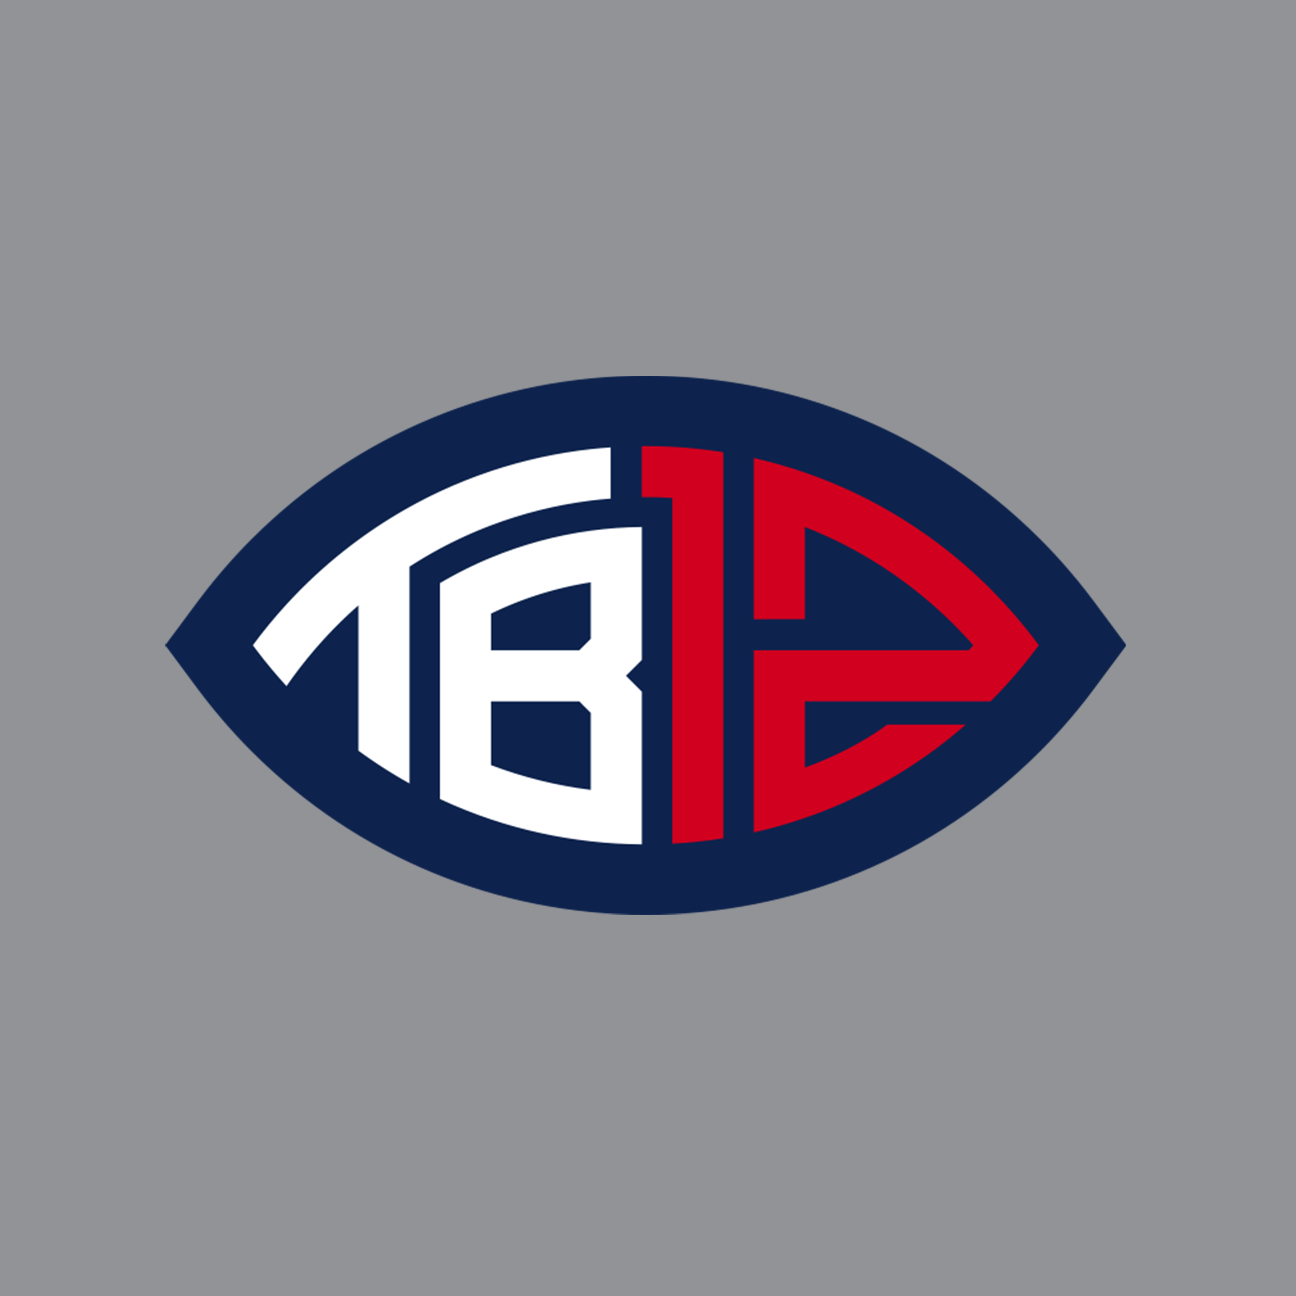 Patriots Football Logo - New logos for 10 NFL stars - Tom Brady, Rob Gronkowski of New